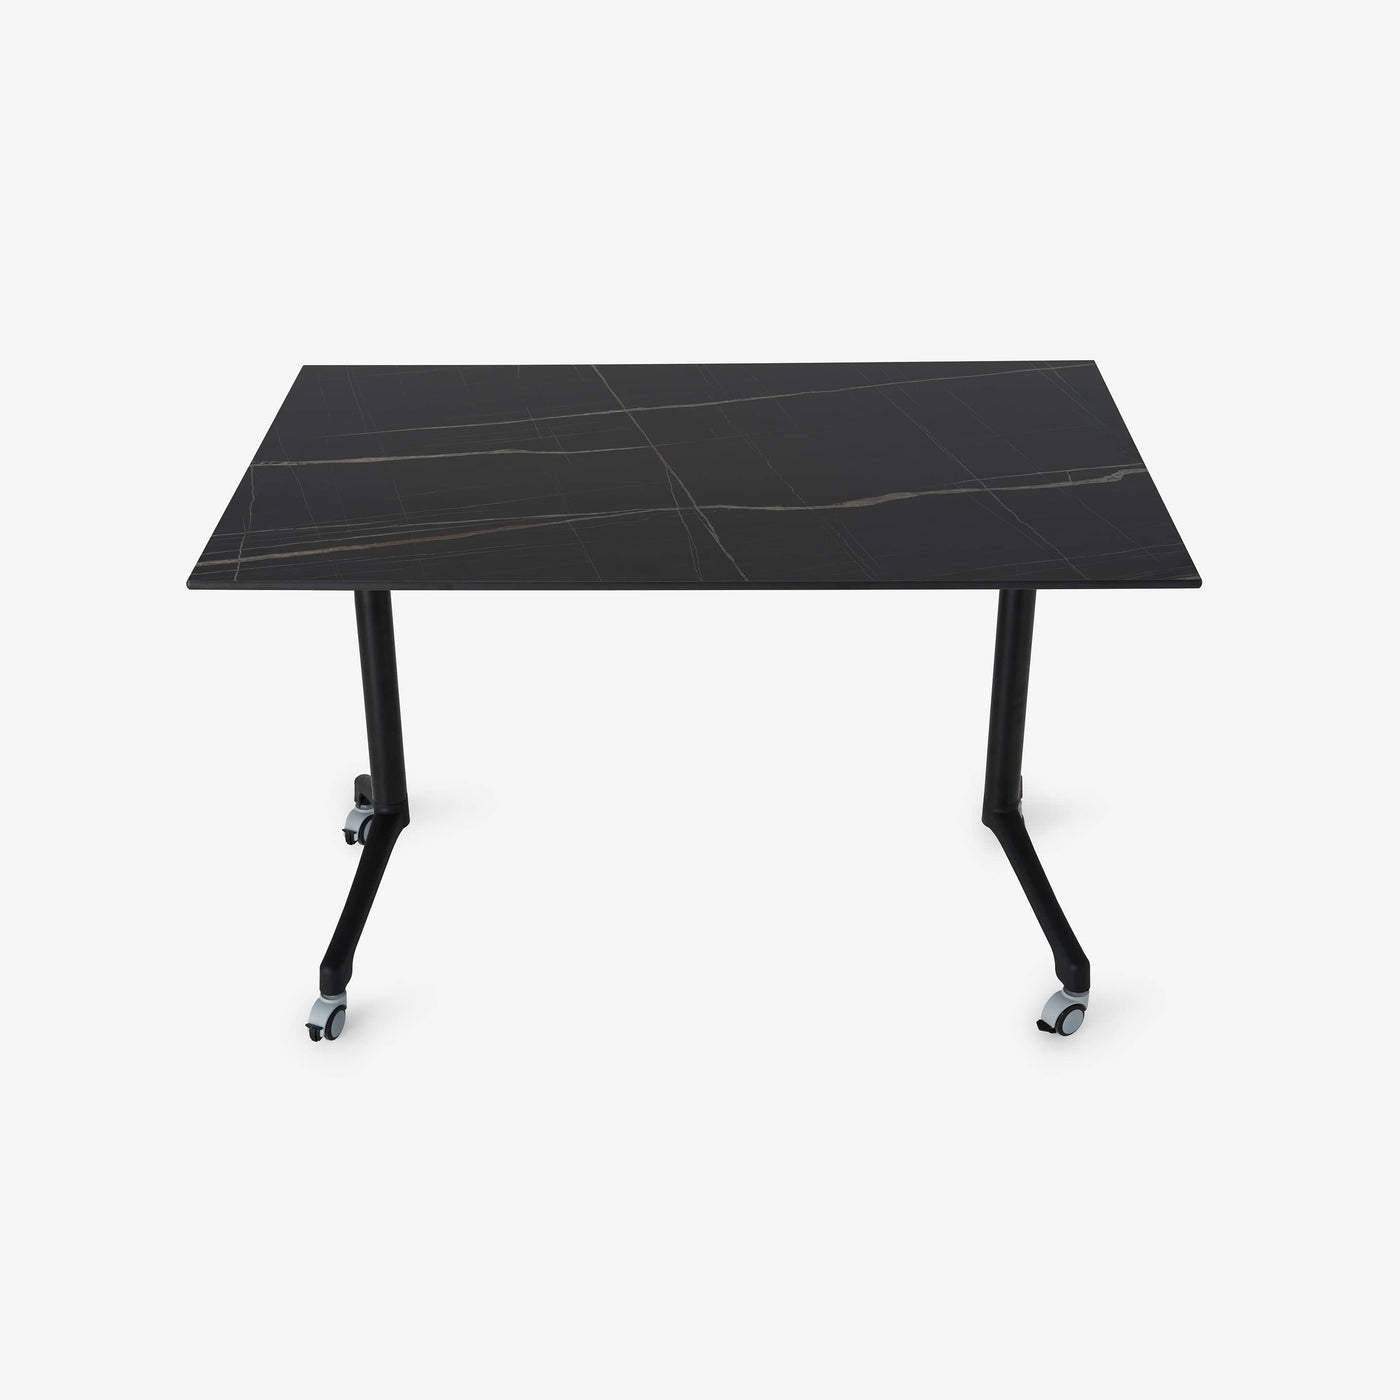 Snap Marble Table, Black, 120x80x69 cm - 1